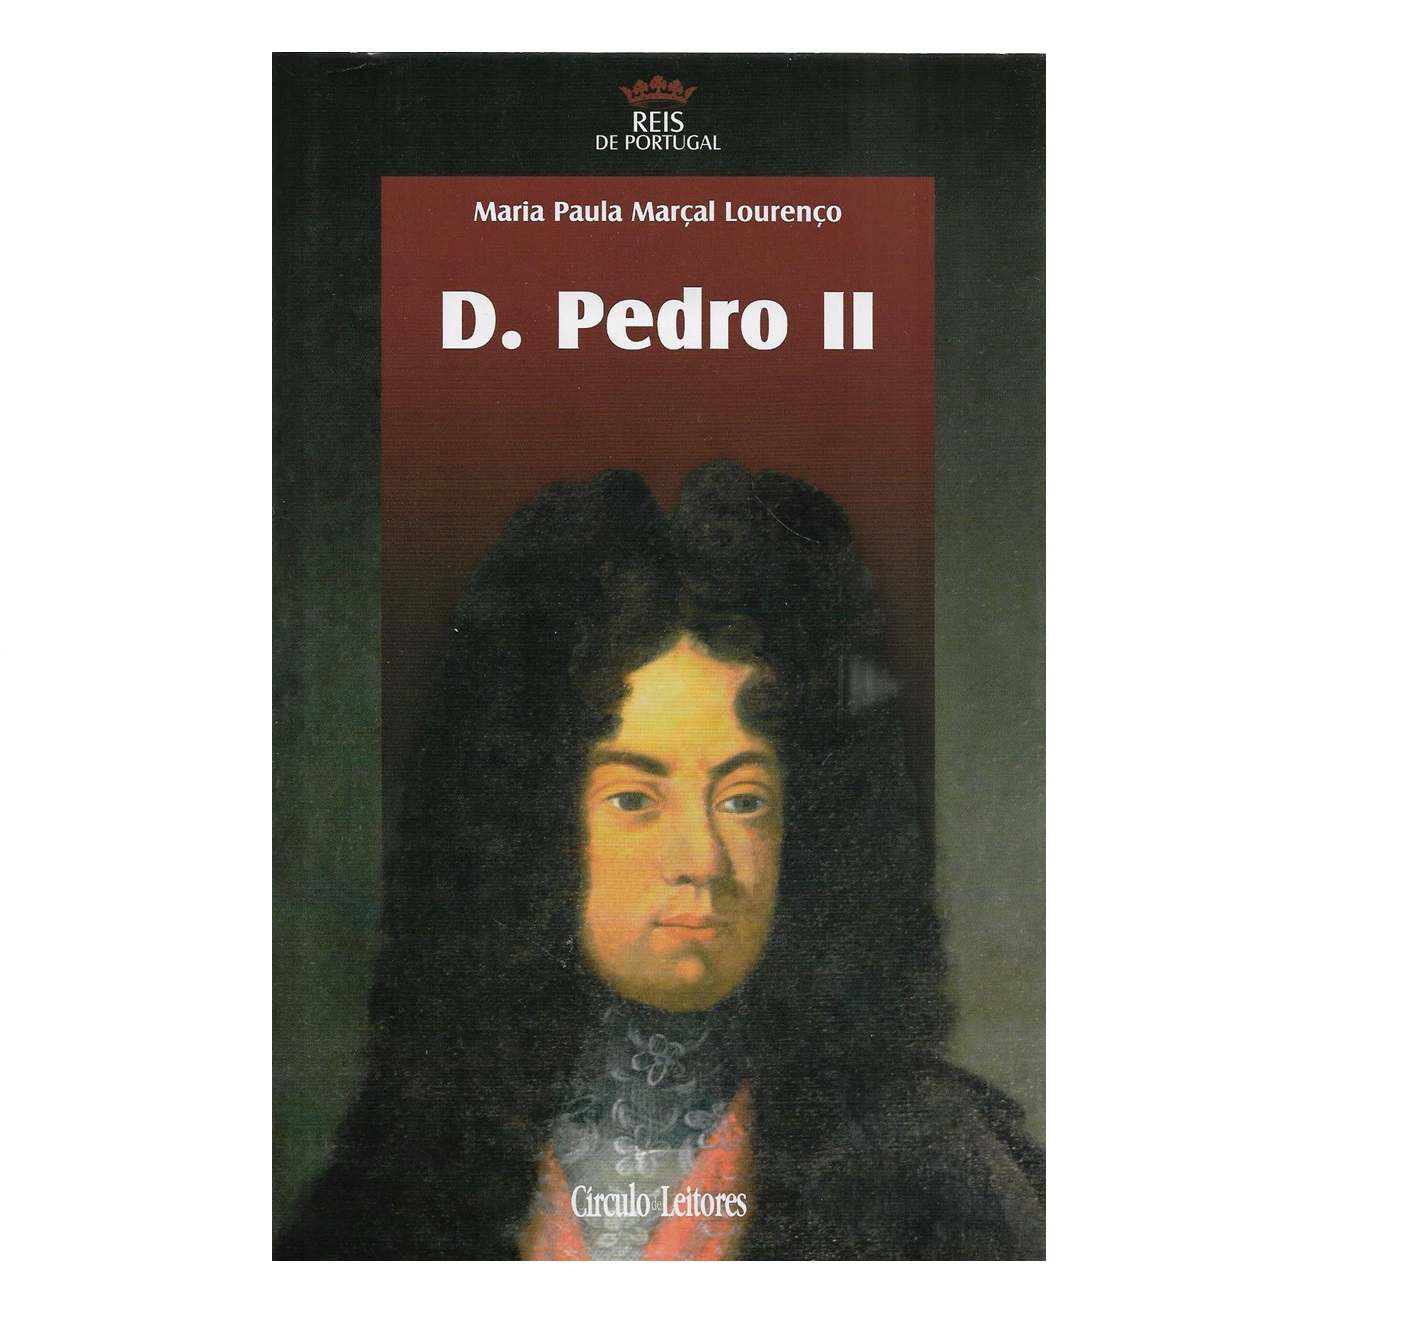  D. PEDRO II